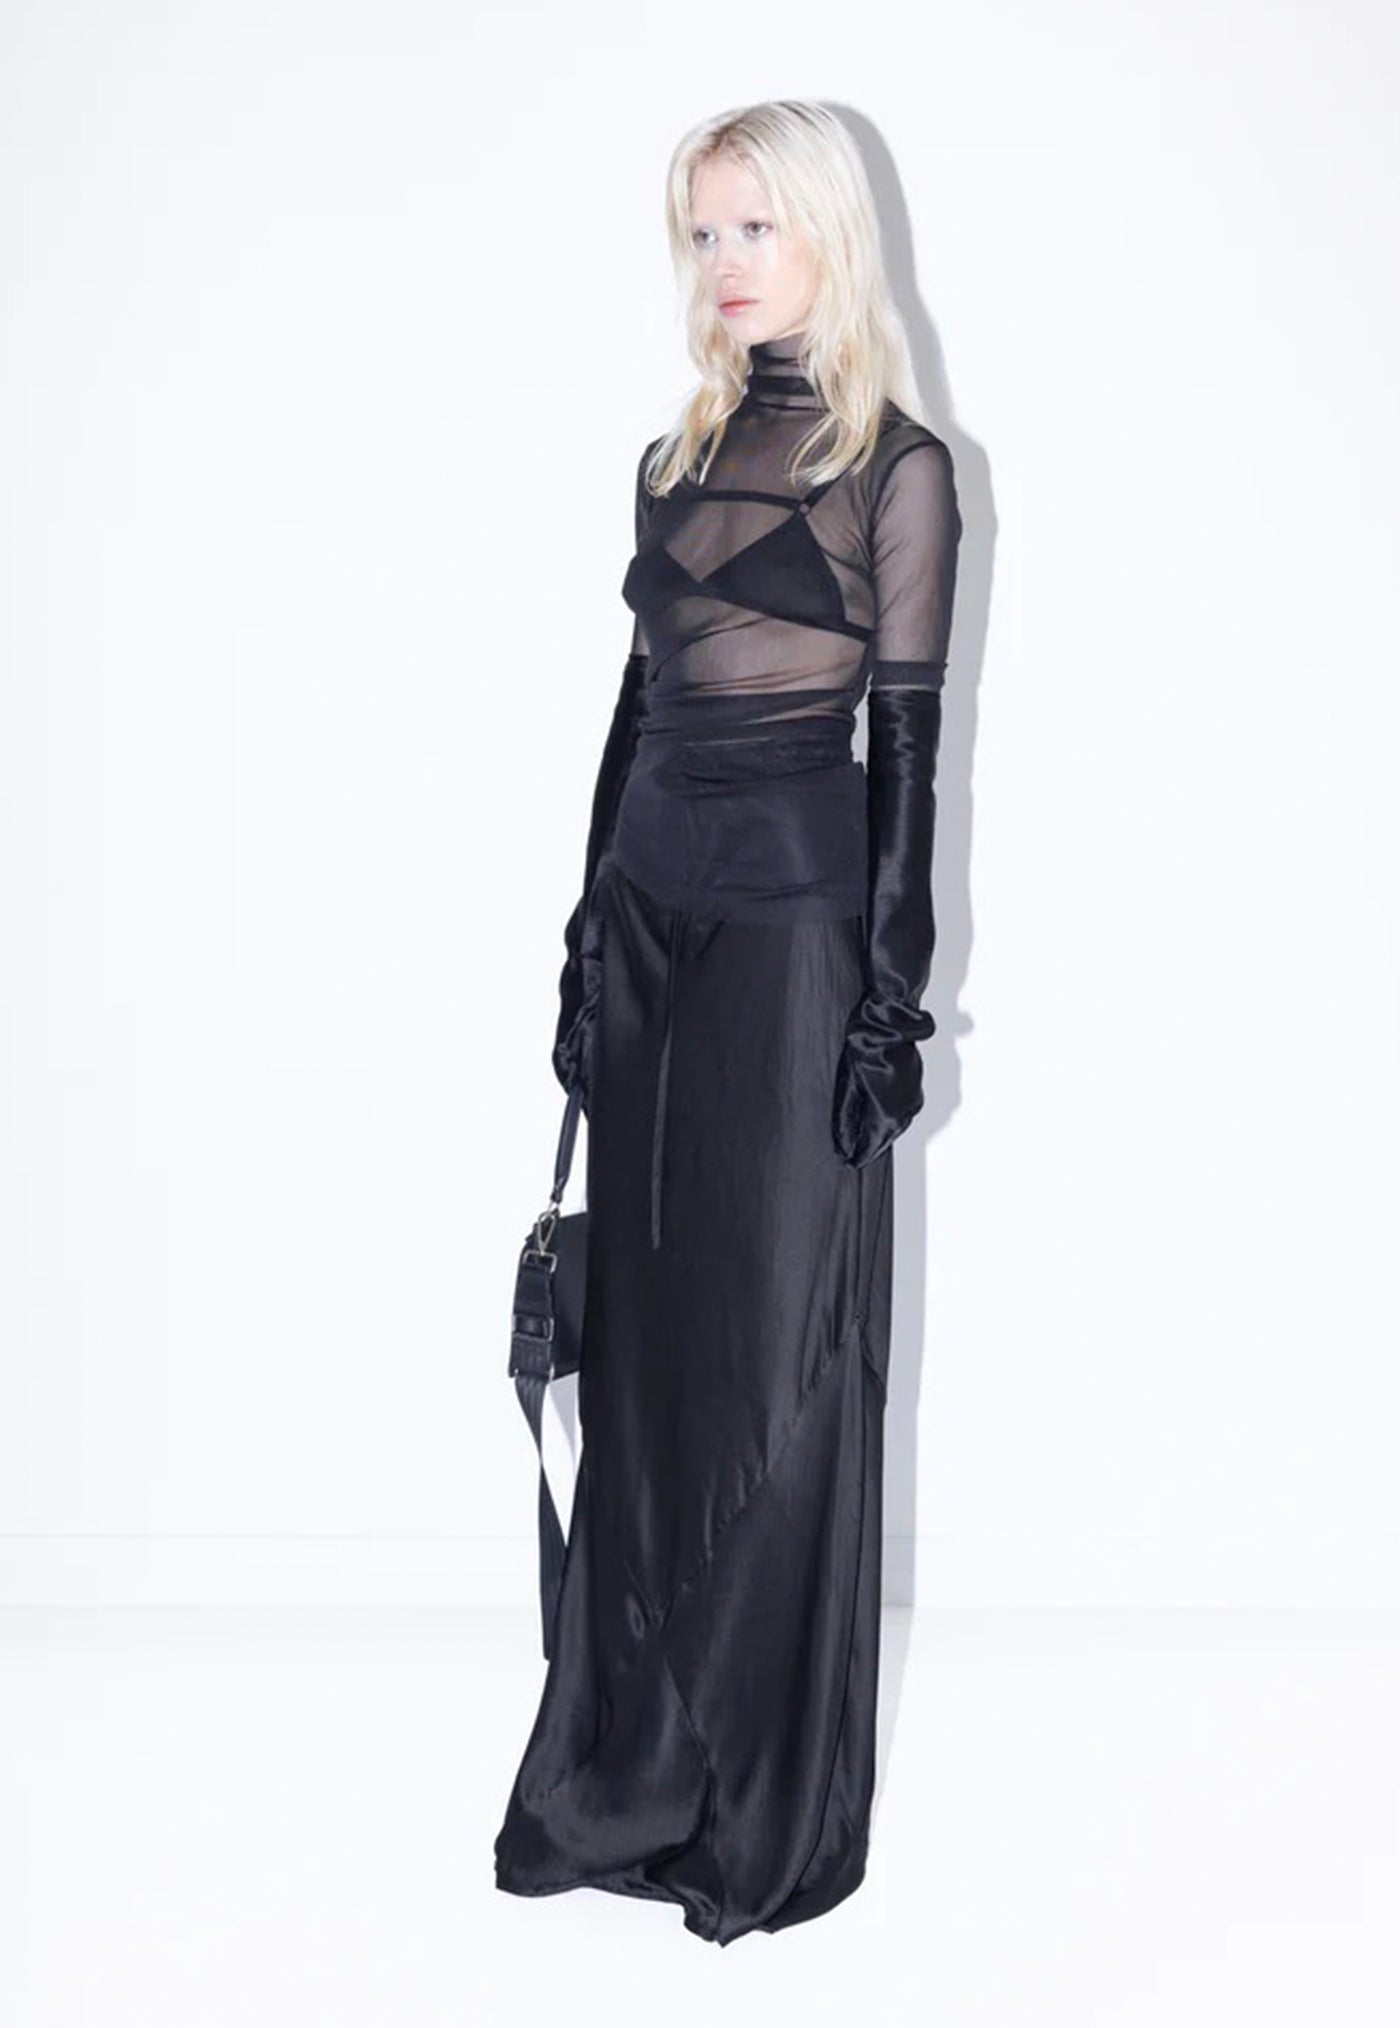 Christiansands Skirt - Black sold by Angel Divine